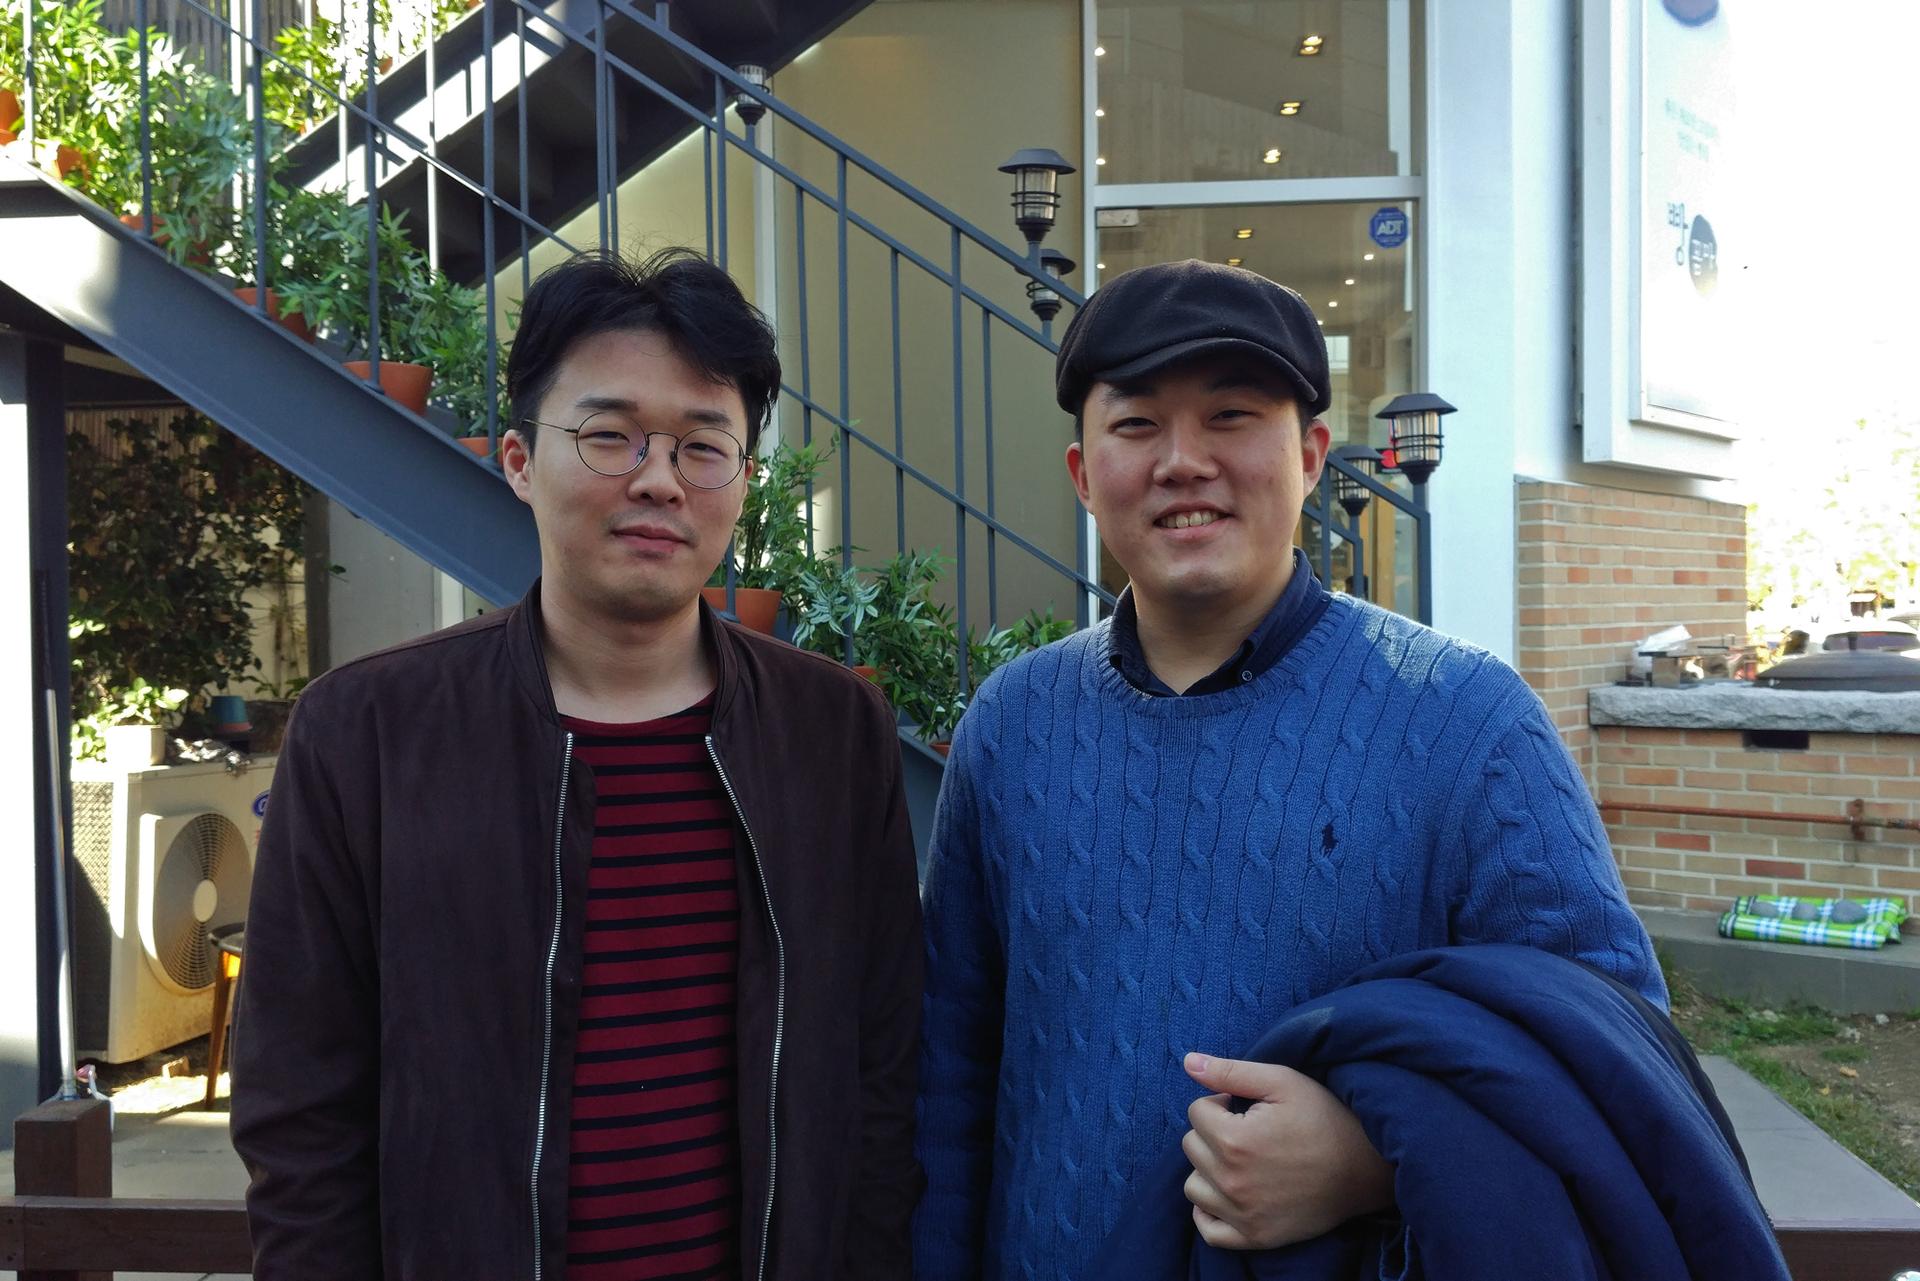 Park Yong-gu, 29, from Suwon (left) and Jung Won-jong, 28